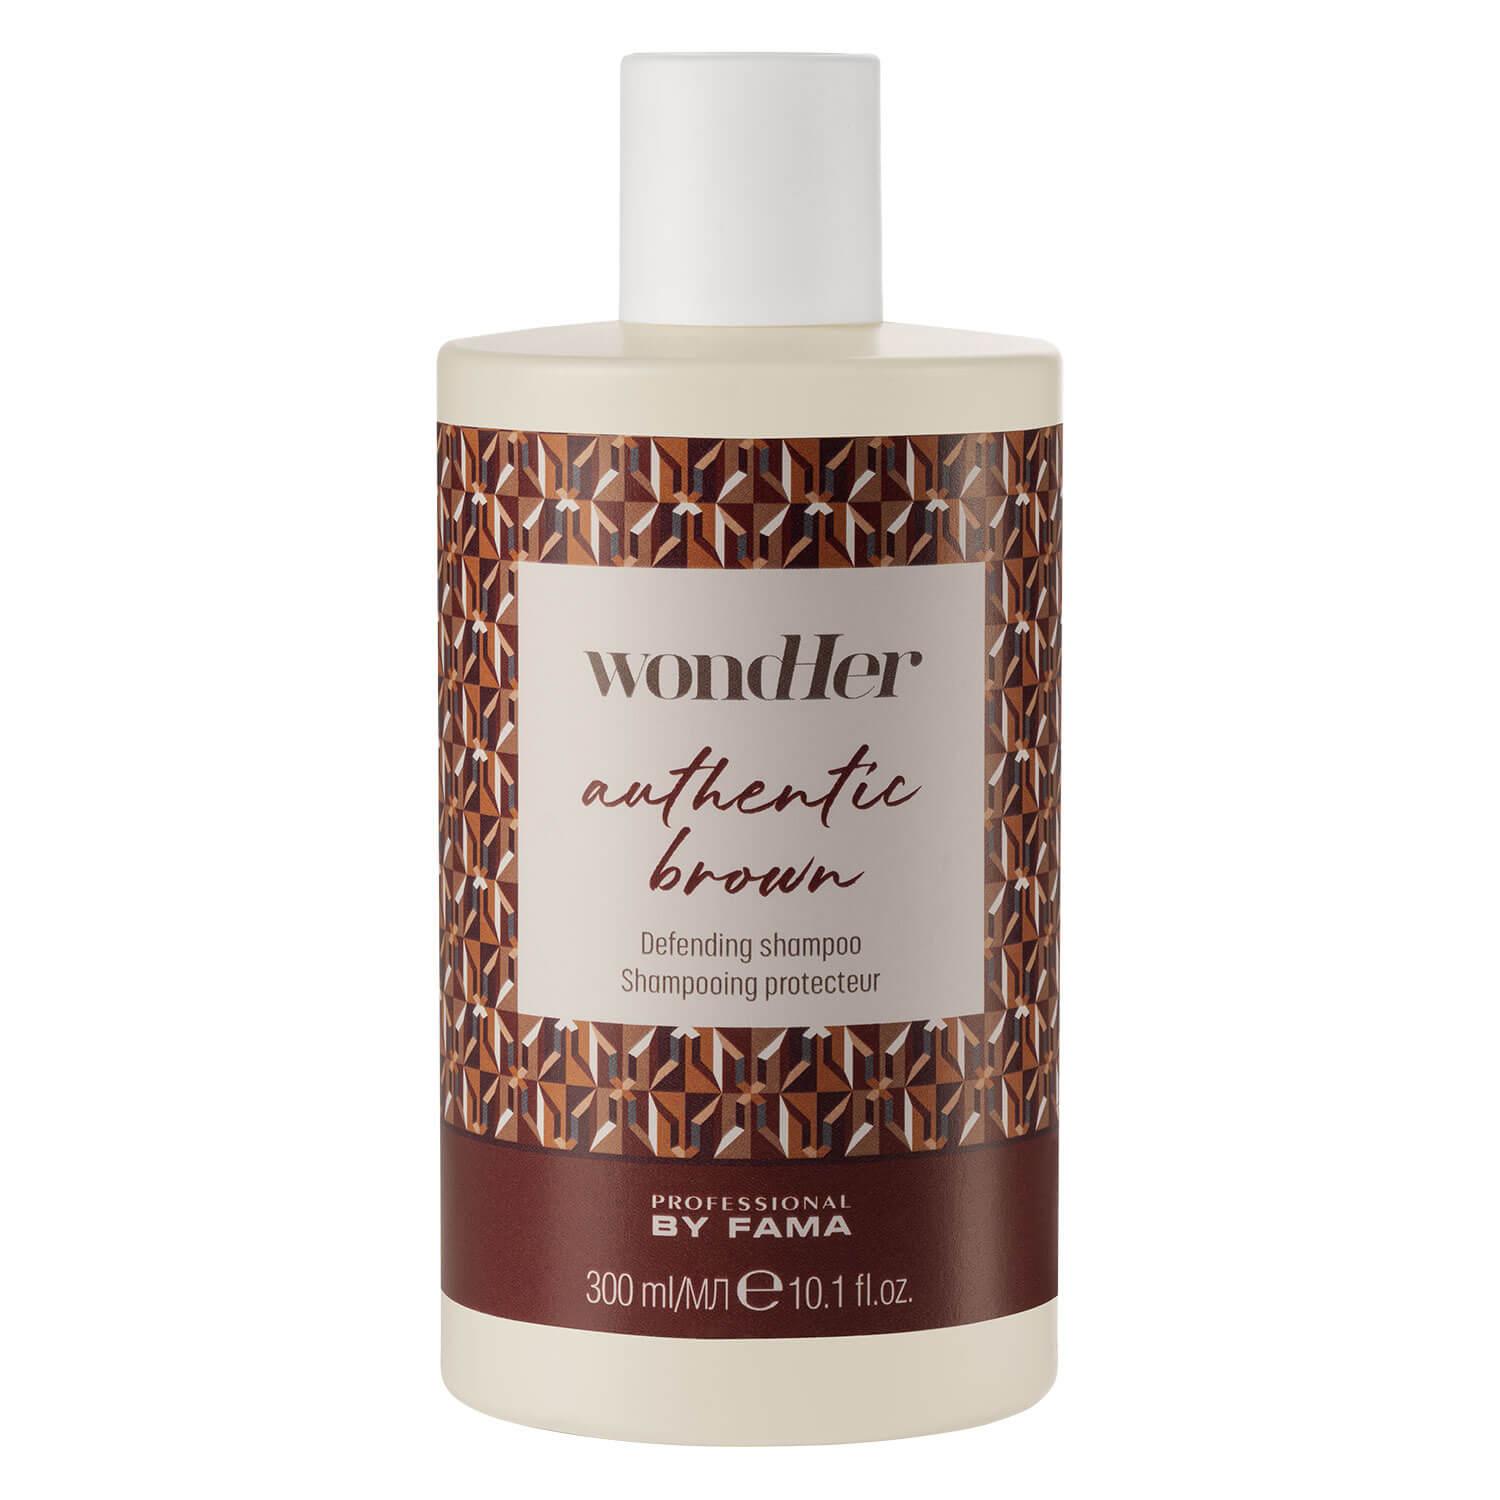 wondHer - Authentic Brown Defending Shampoo